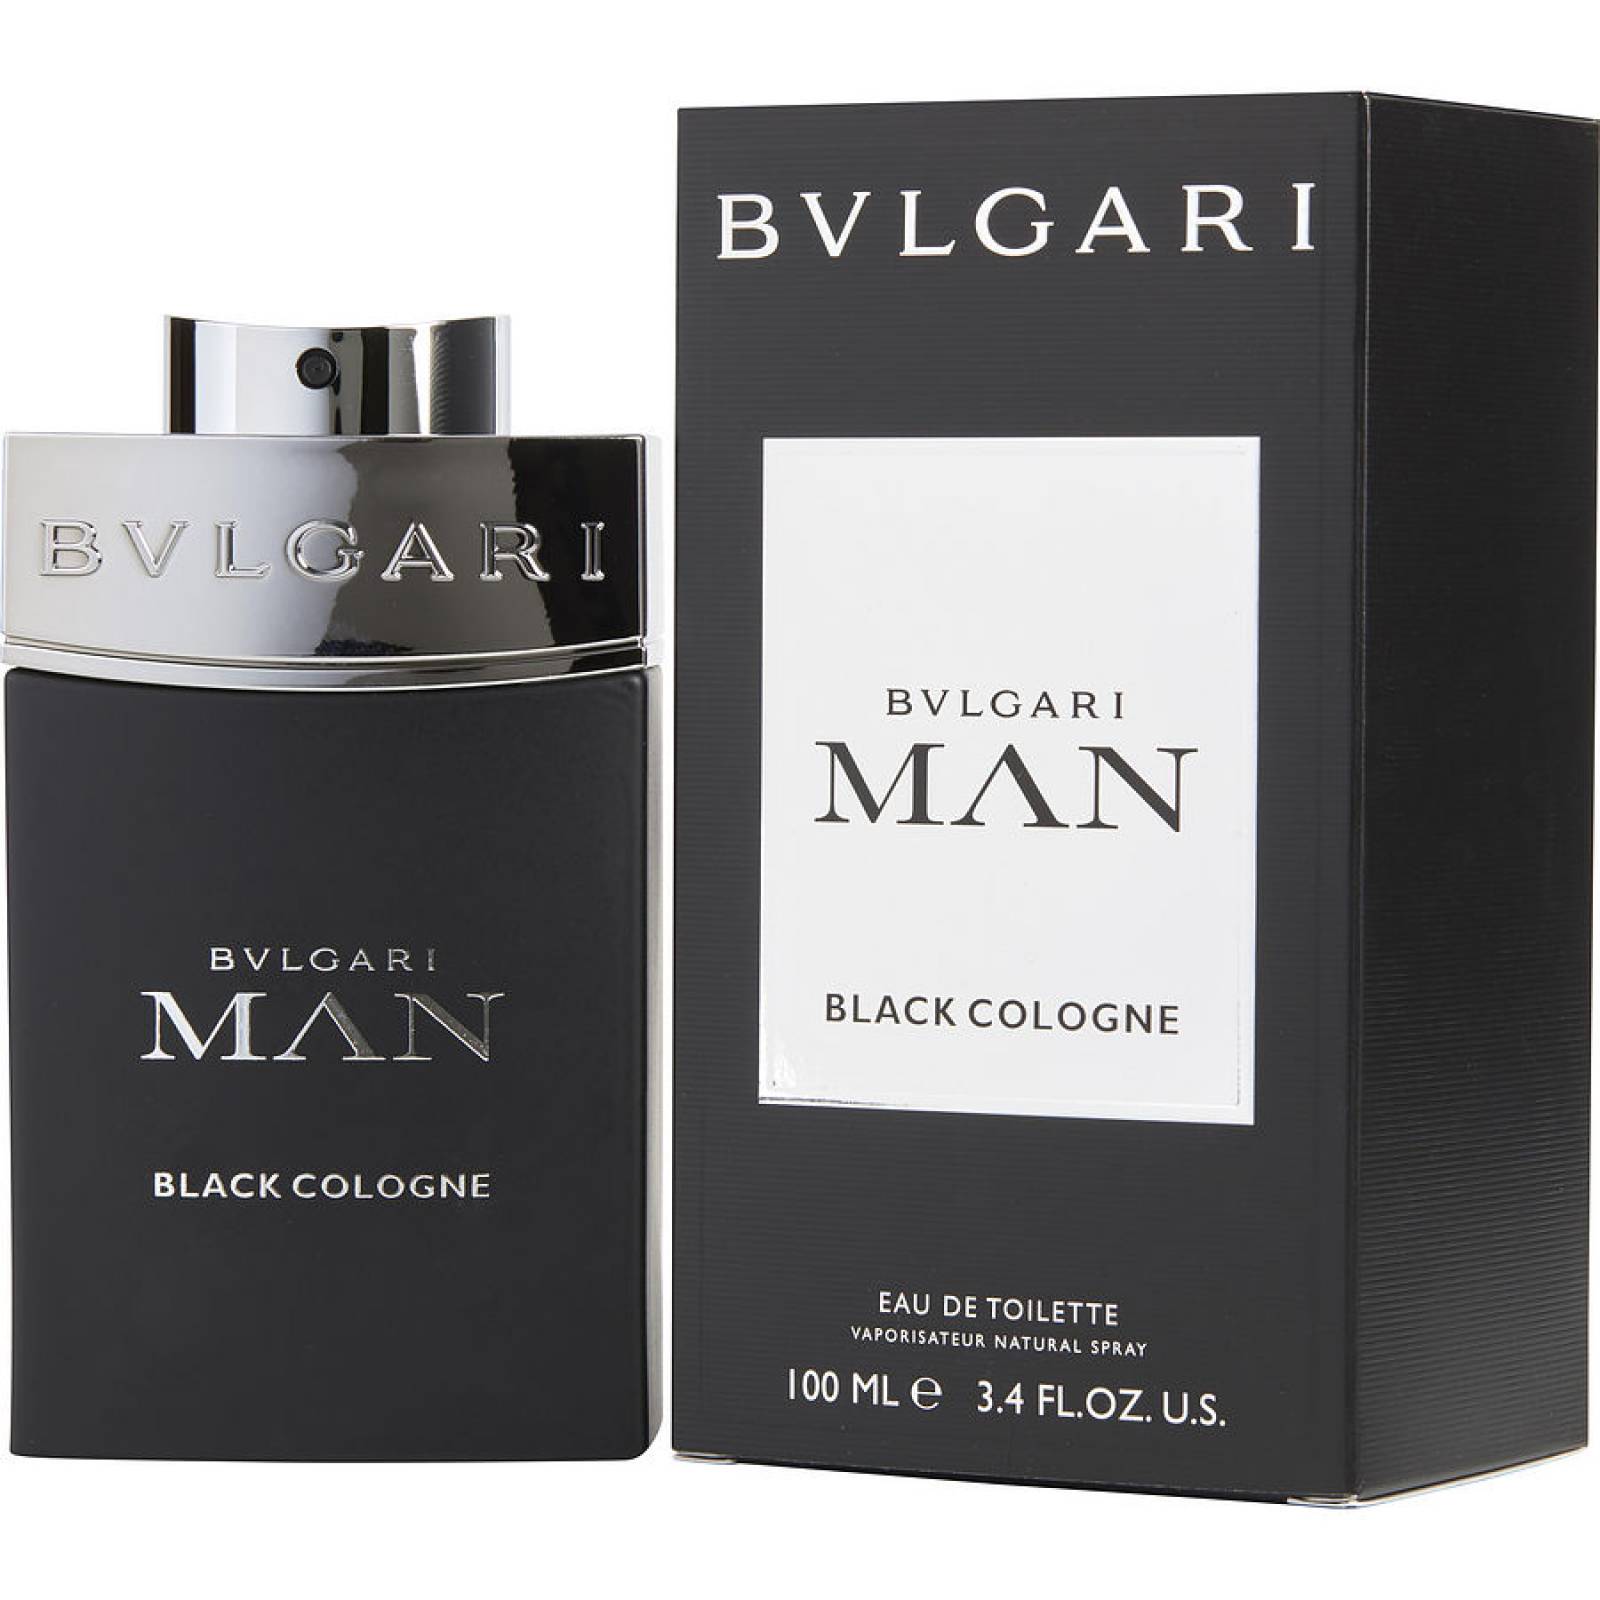 Perfume Bvlgari Man Black Cologne 